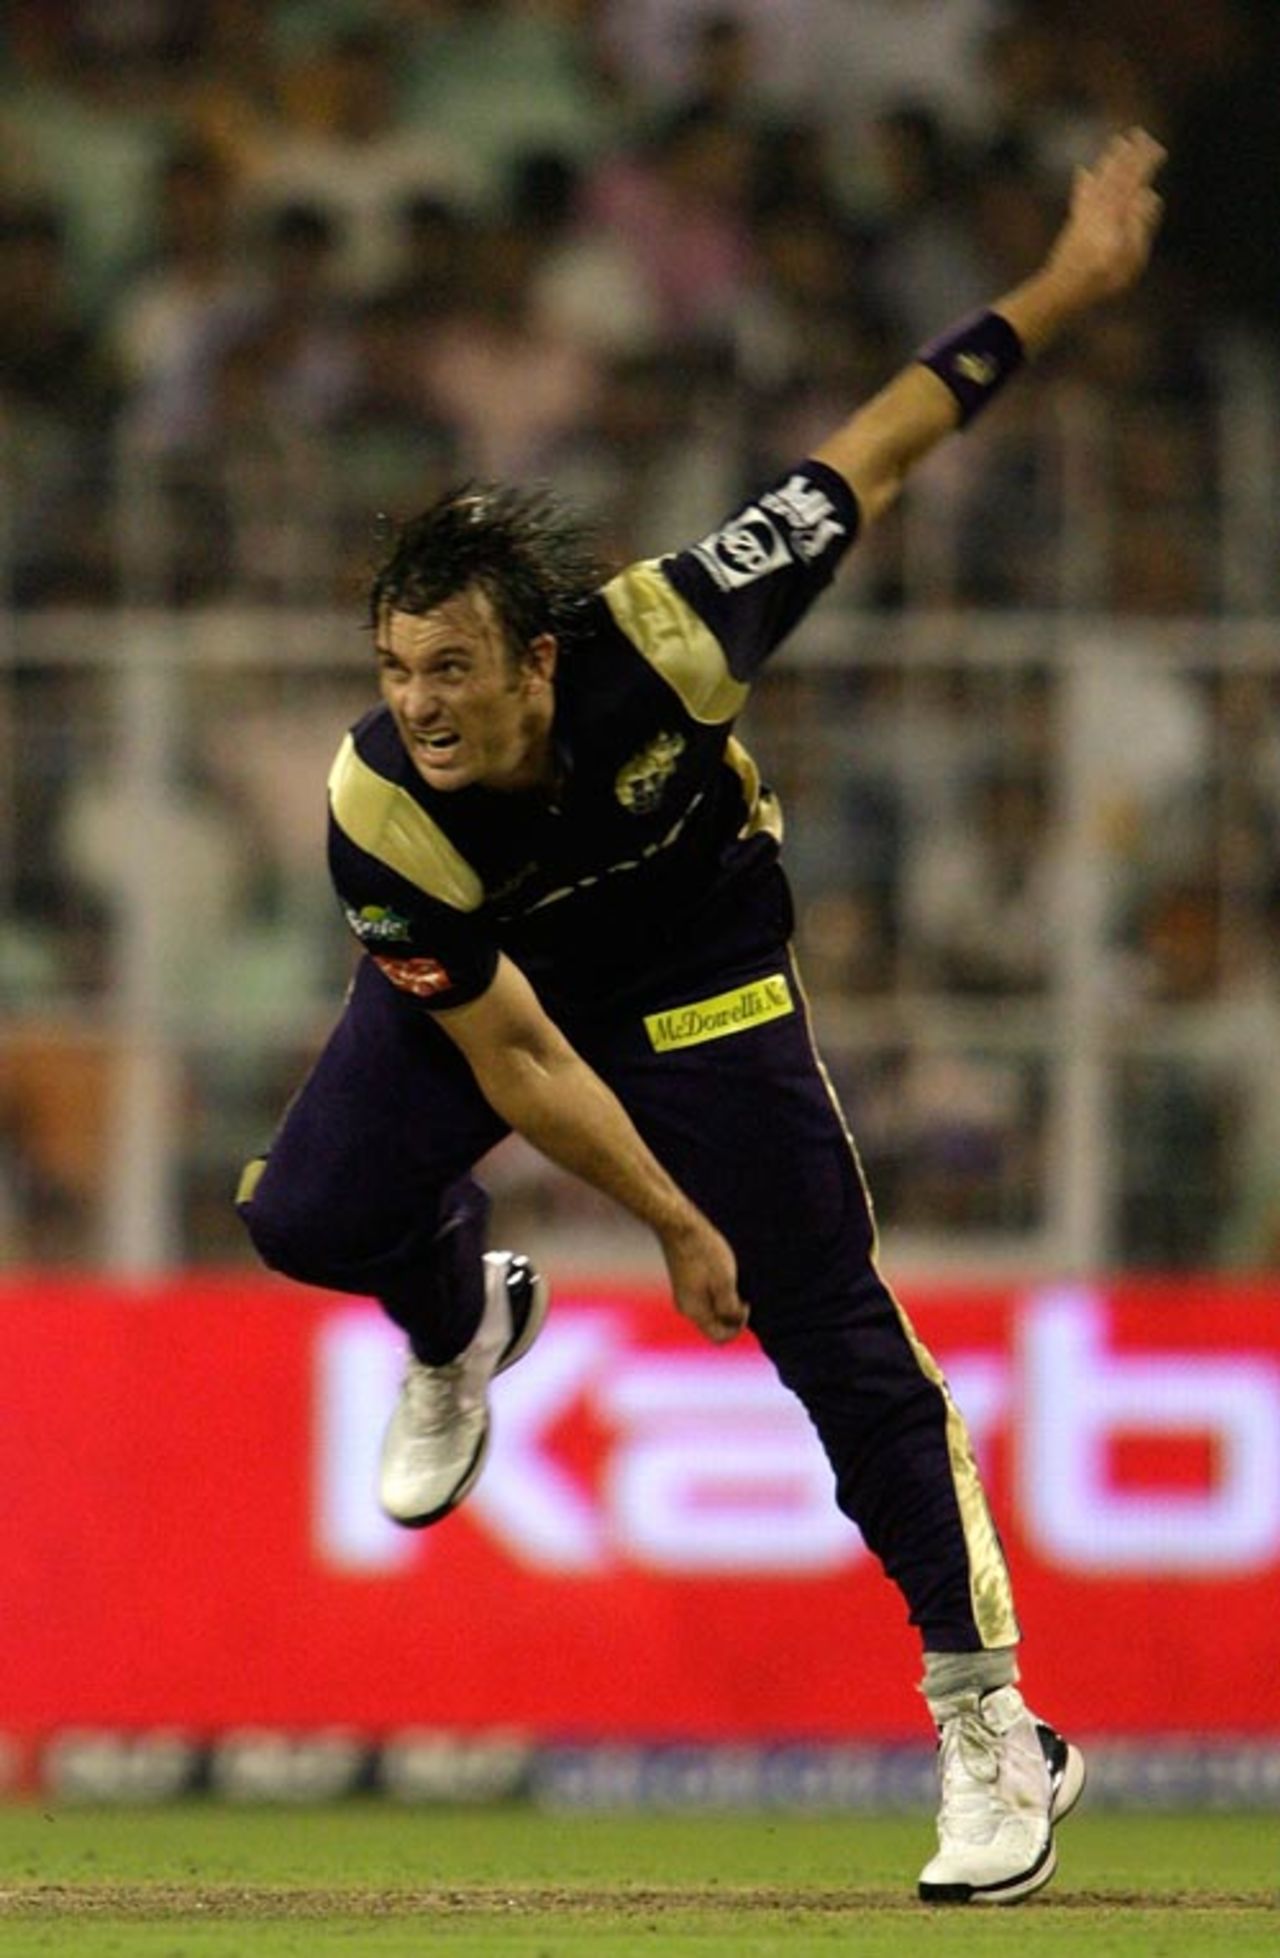 Shane Bond is all effort as he releases the ball, Kolkata Knight Riders v Deccan Chargers, IPL, Kolkata, April 1, 2010